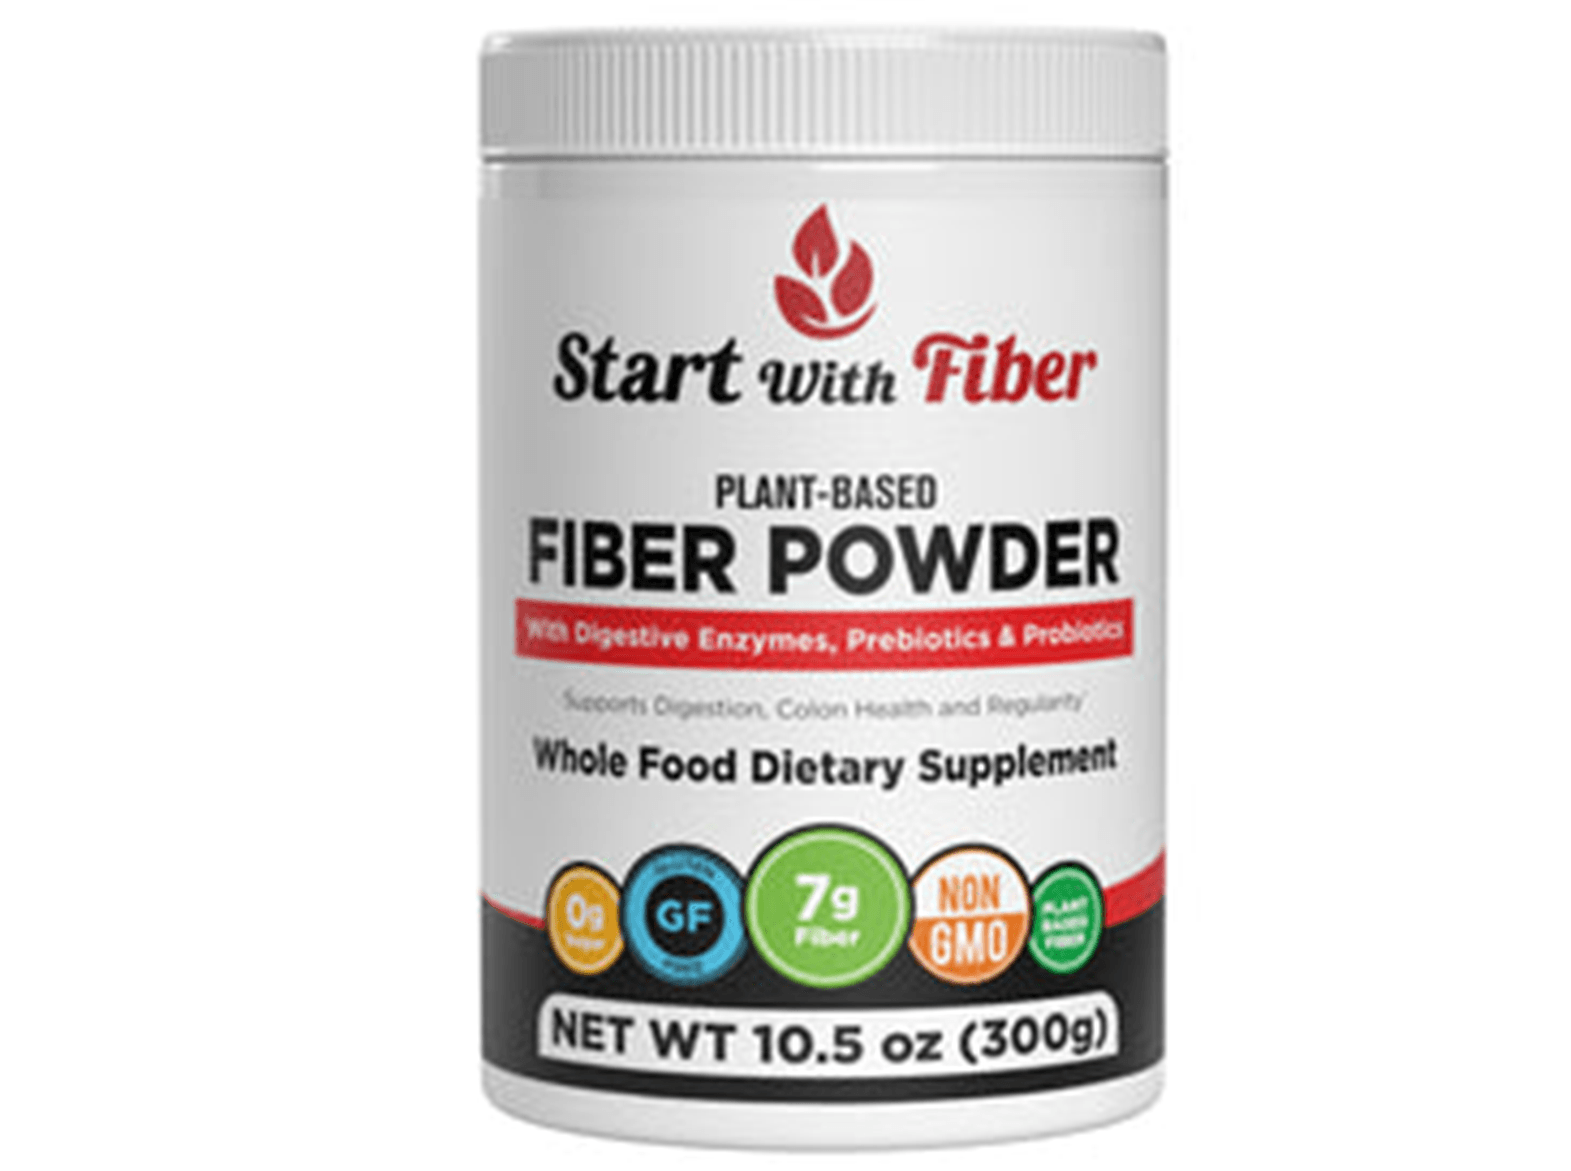 Plant-Based Fiber Powder With Digestive Enzymes, Prebiotics and Probiotics - Start with Fiber